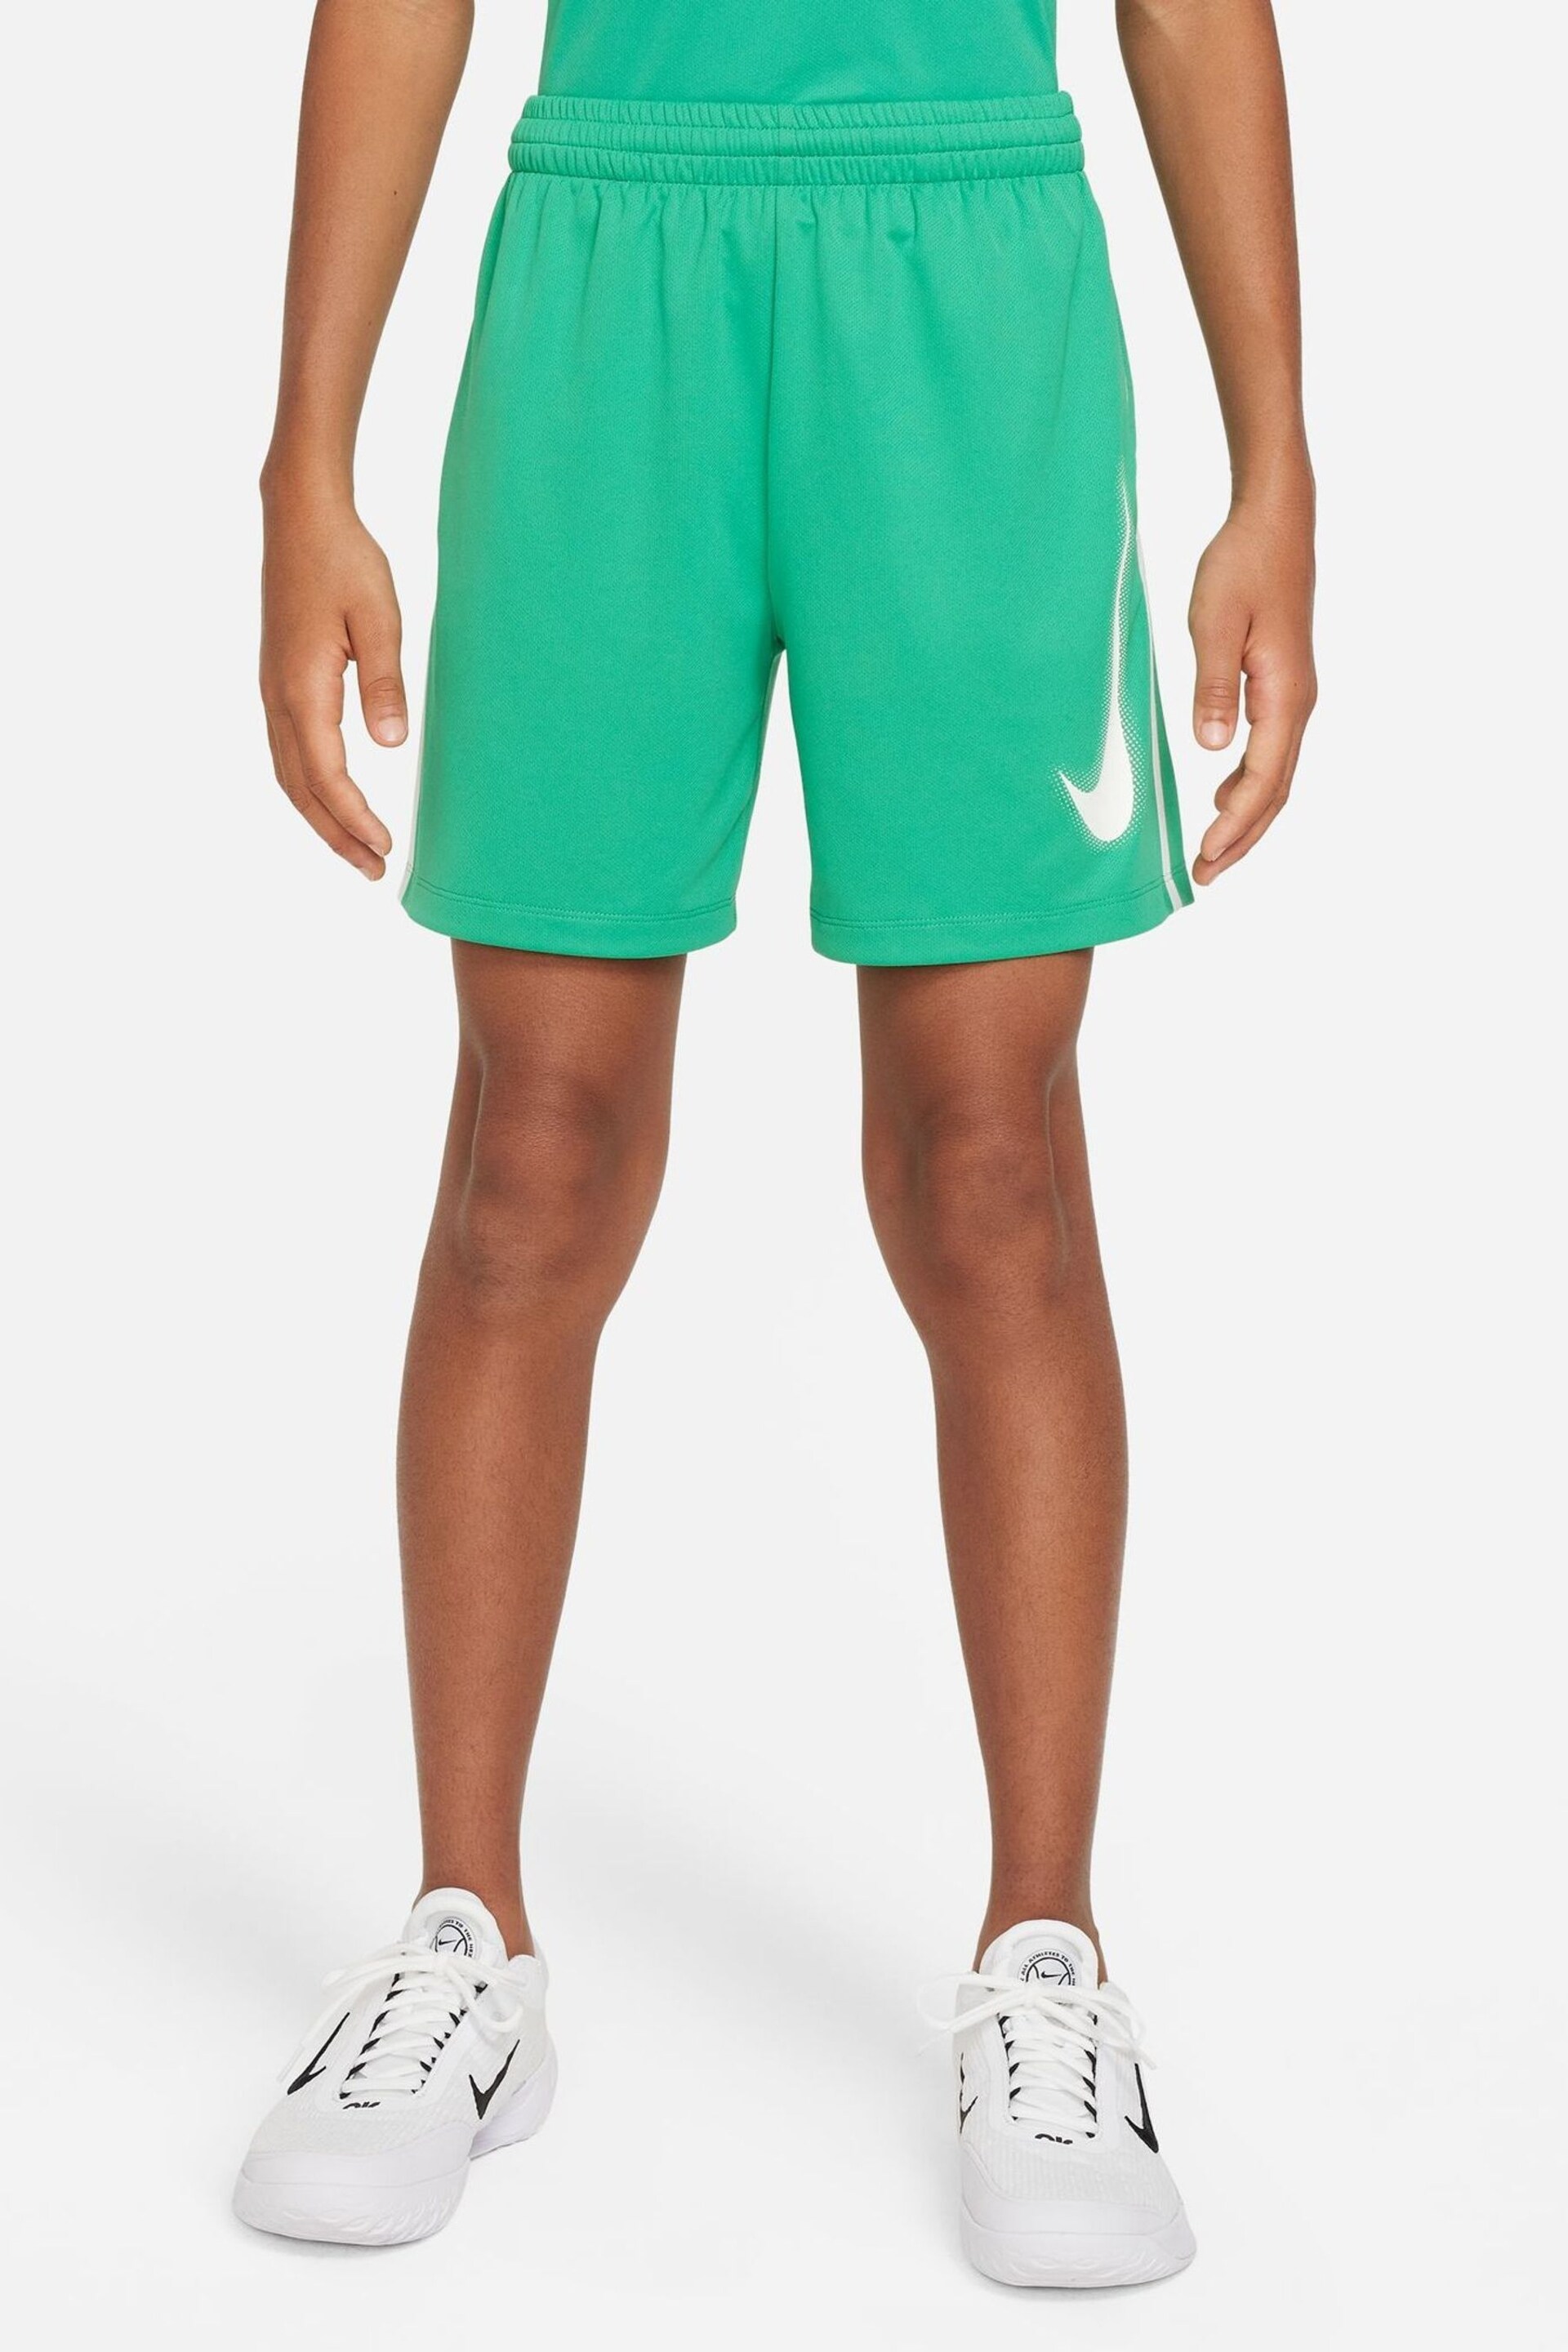 Nike Bright Green Dri-FIT Multi+ Graphic Training Shorts - Image 1 of 6